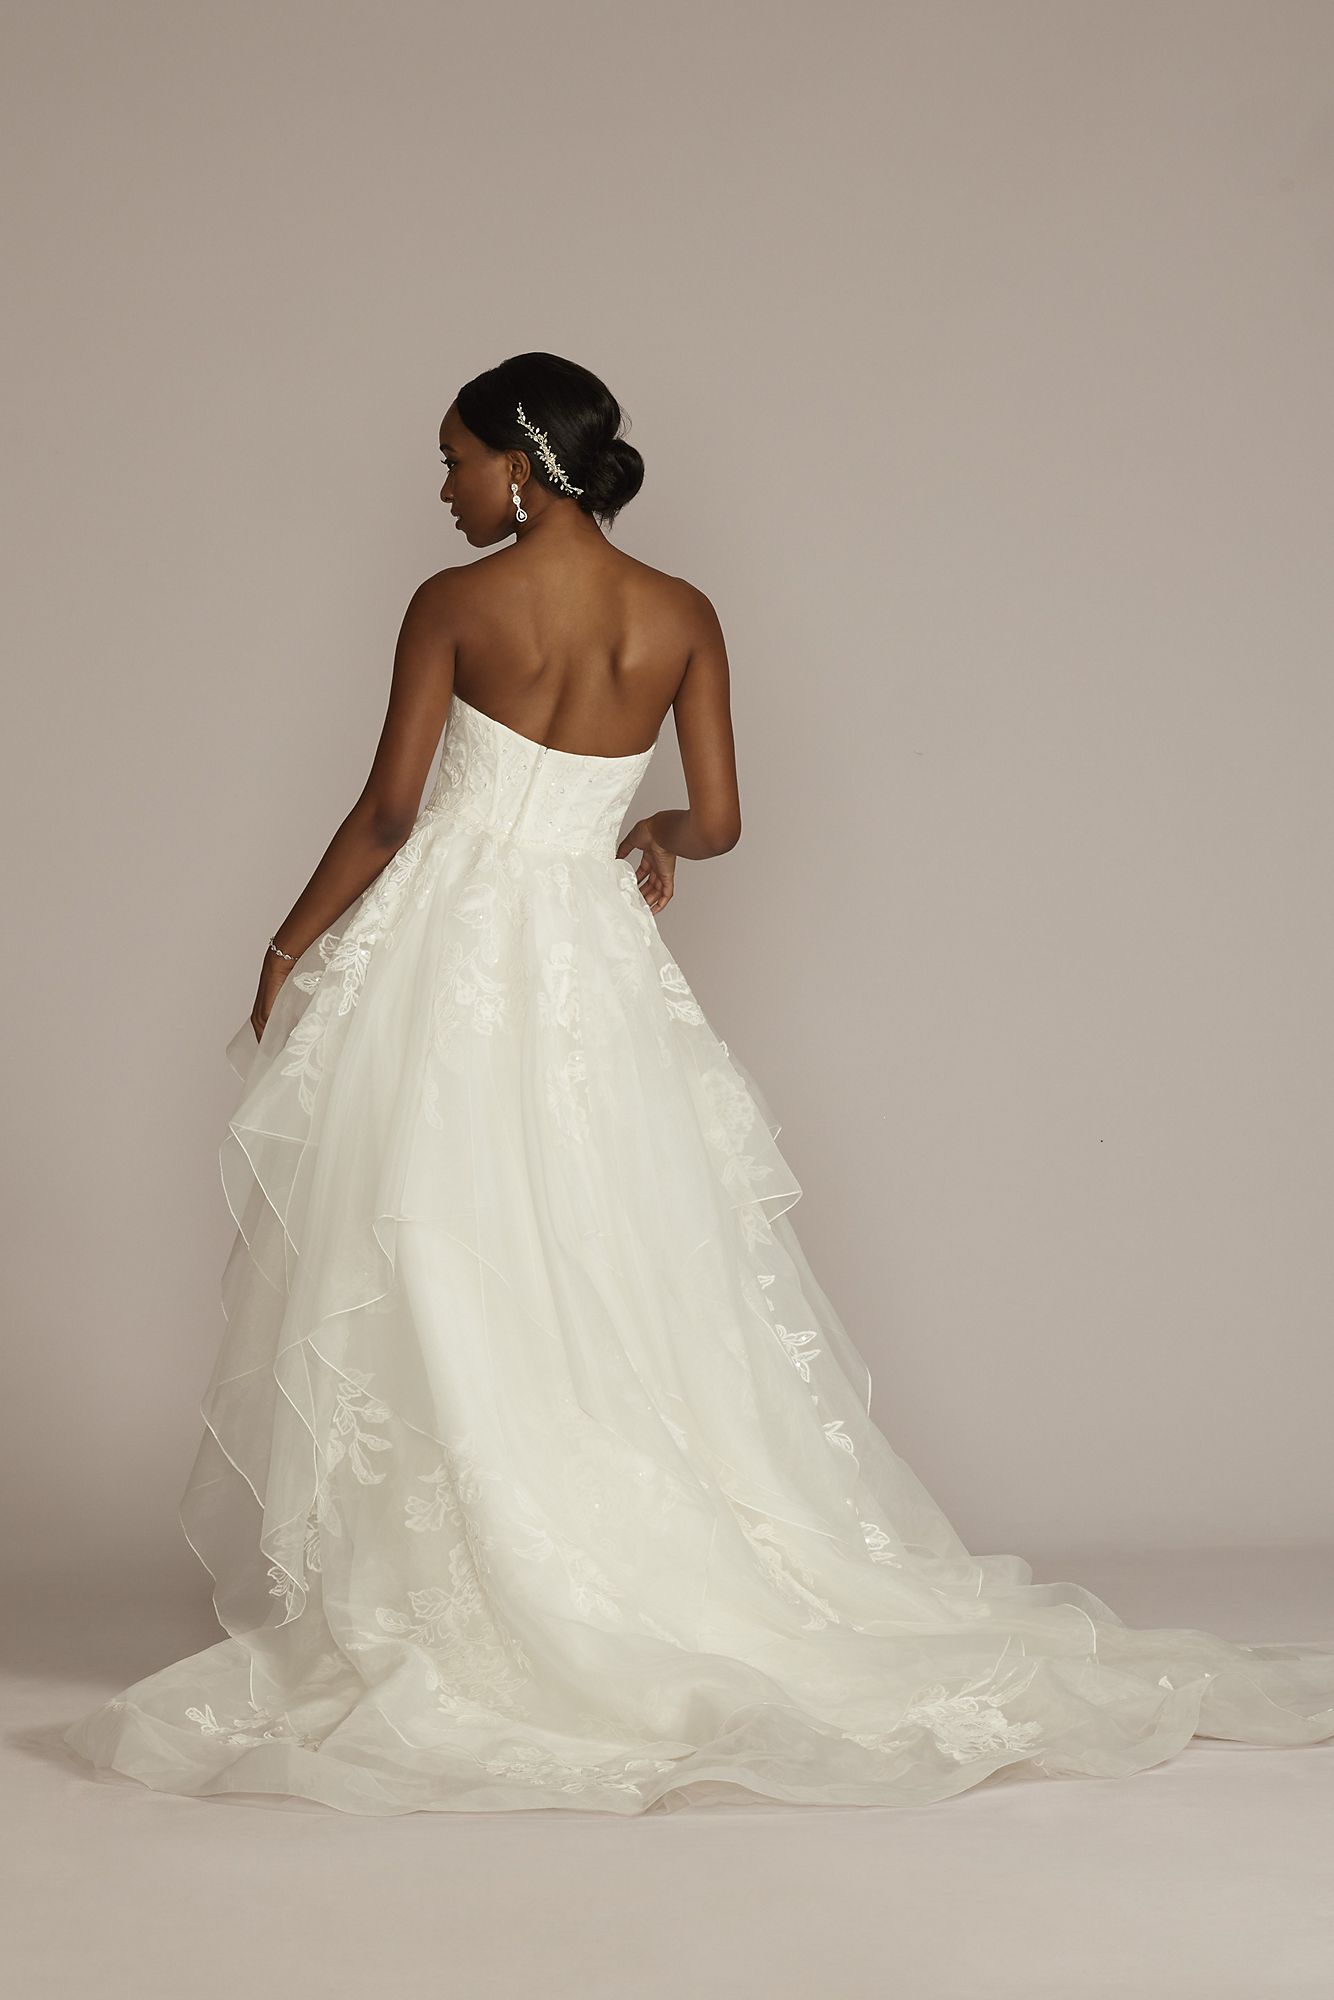 Tiered Floral Tall Ball Gown Wedding Dress Oleg Cassini 4XLCWG936